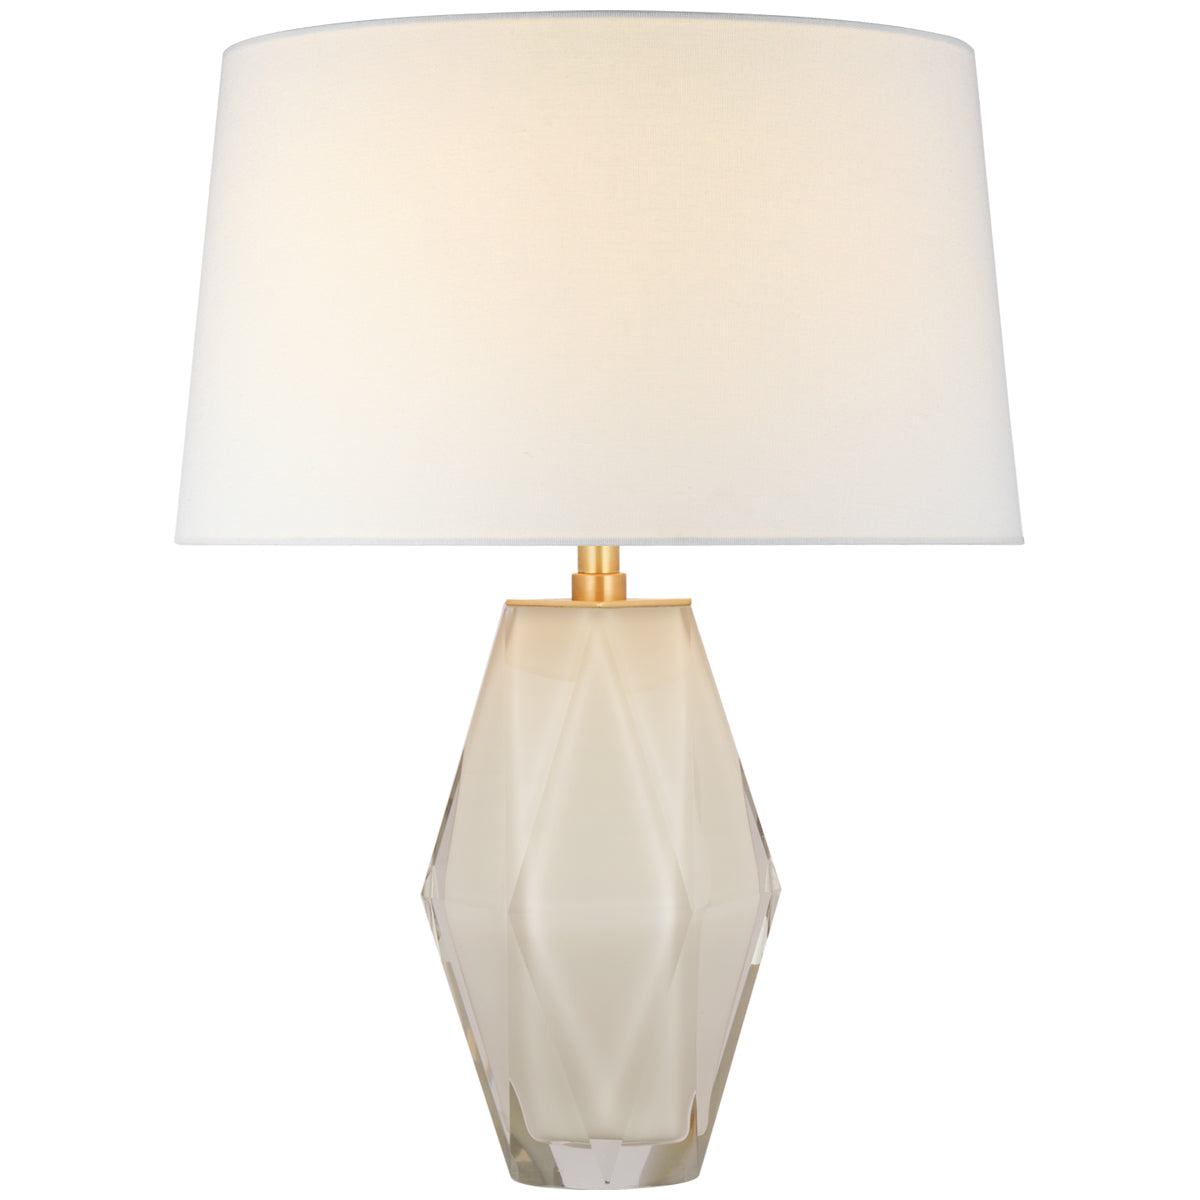 Visual Comfort Palacios Medium Table Lamp